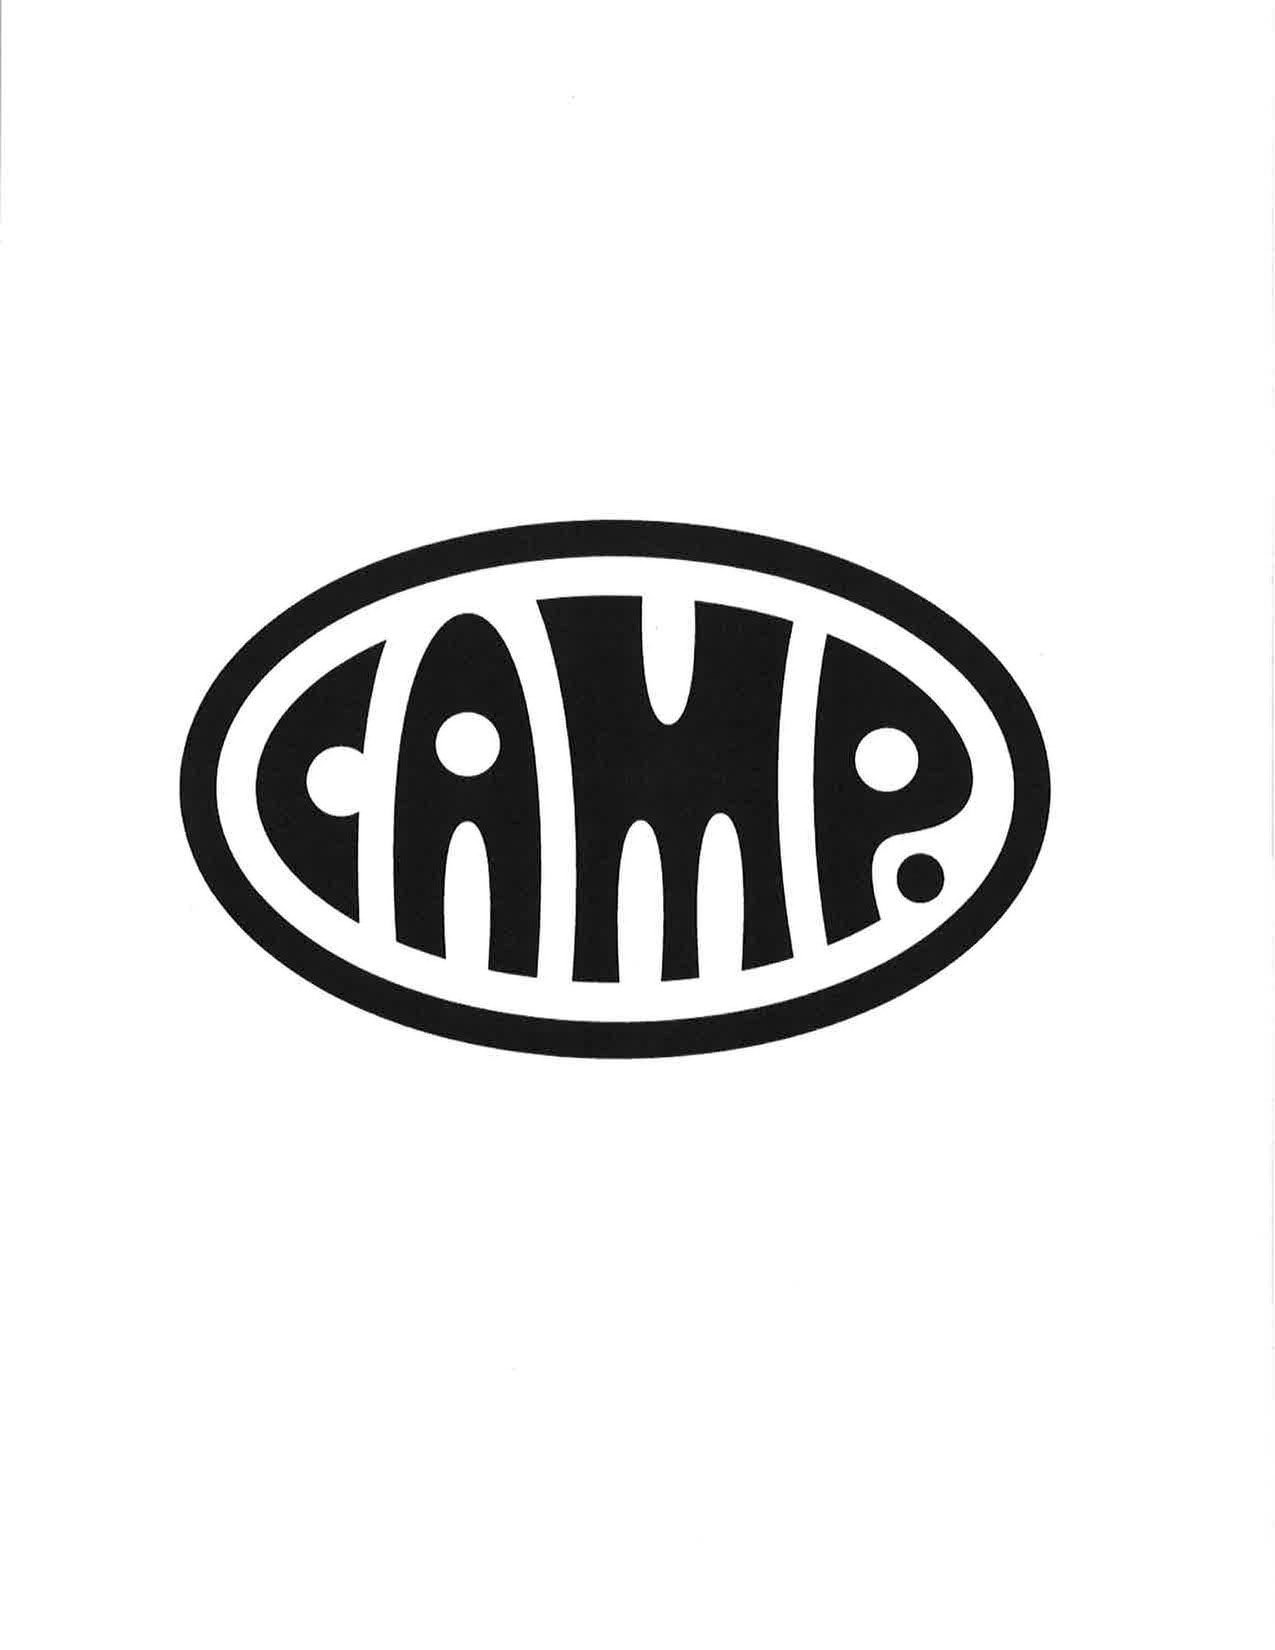 CAMP.